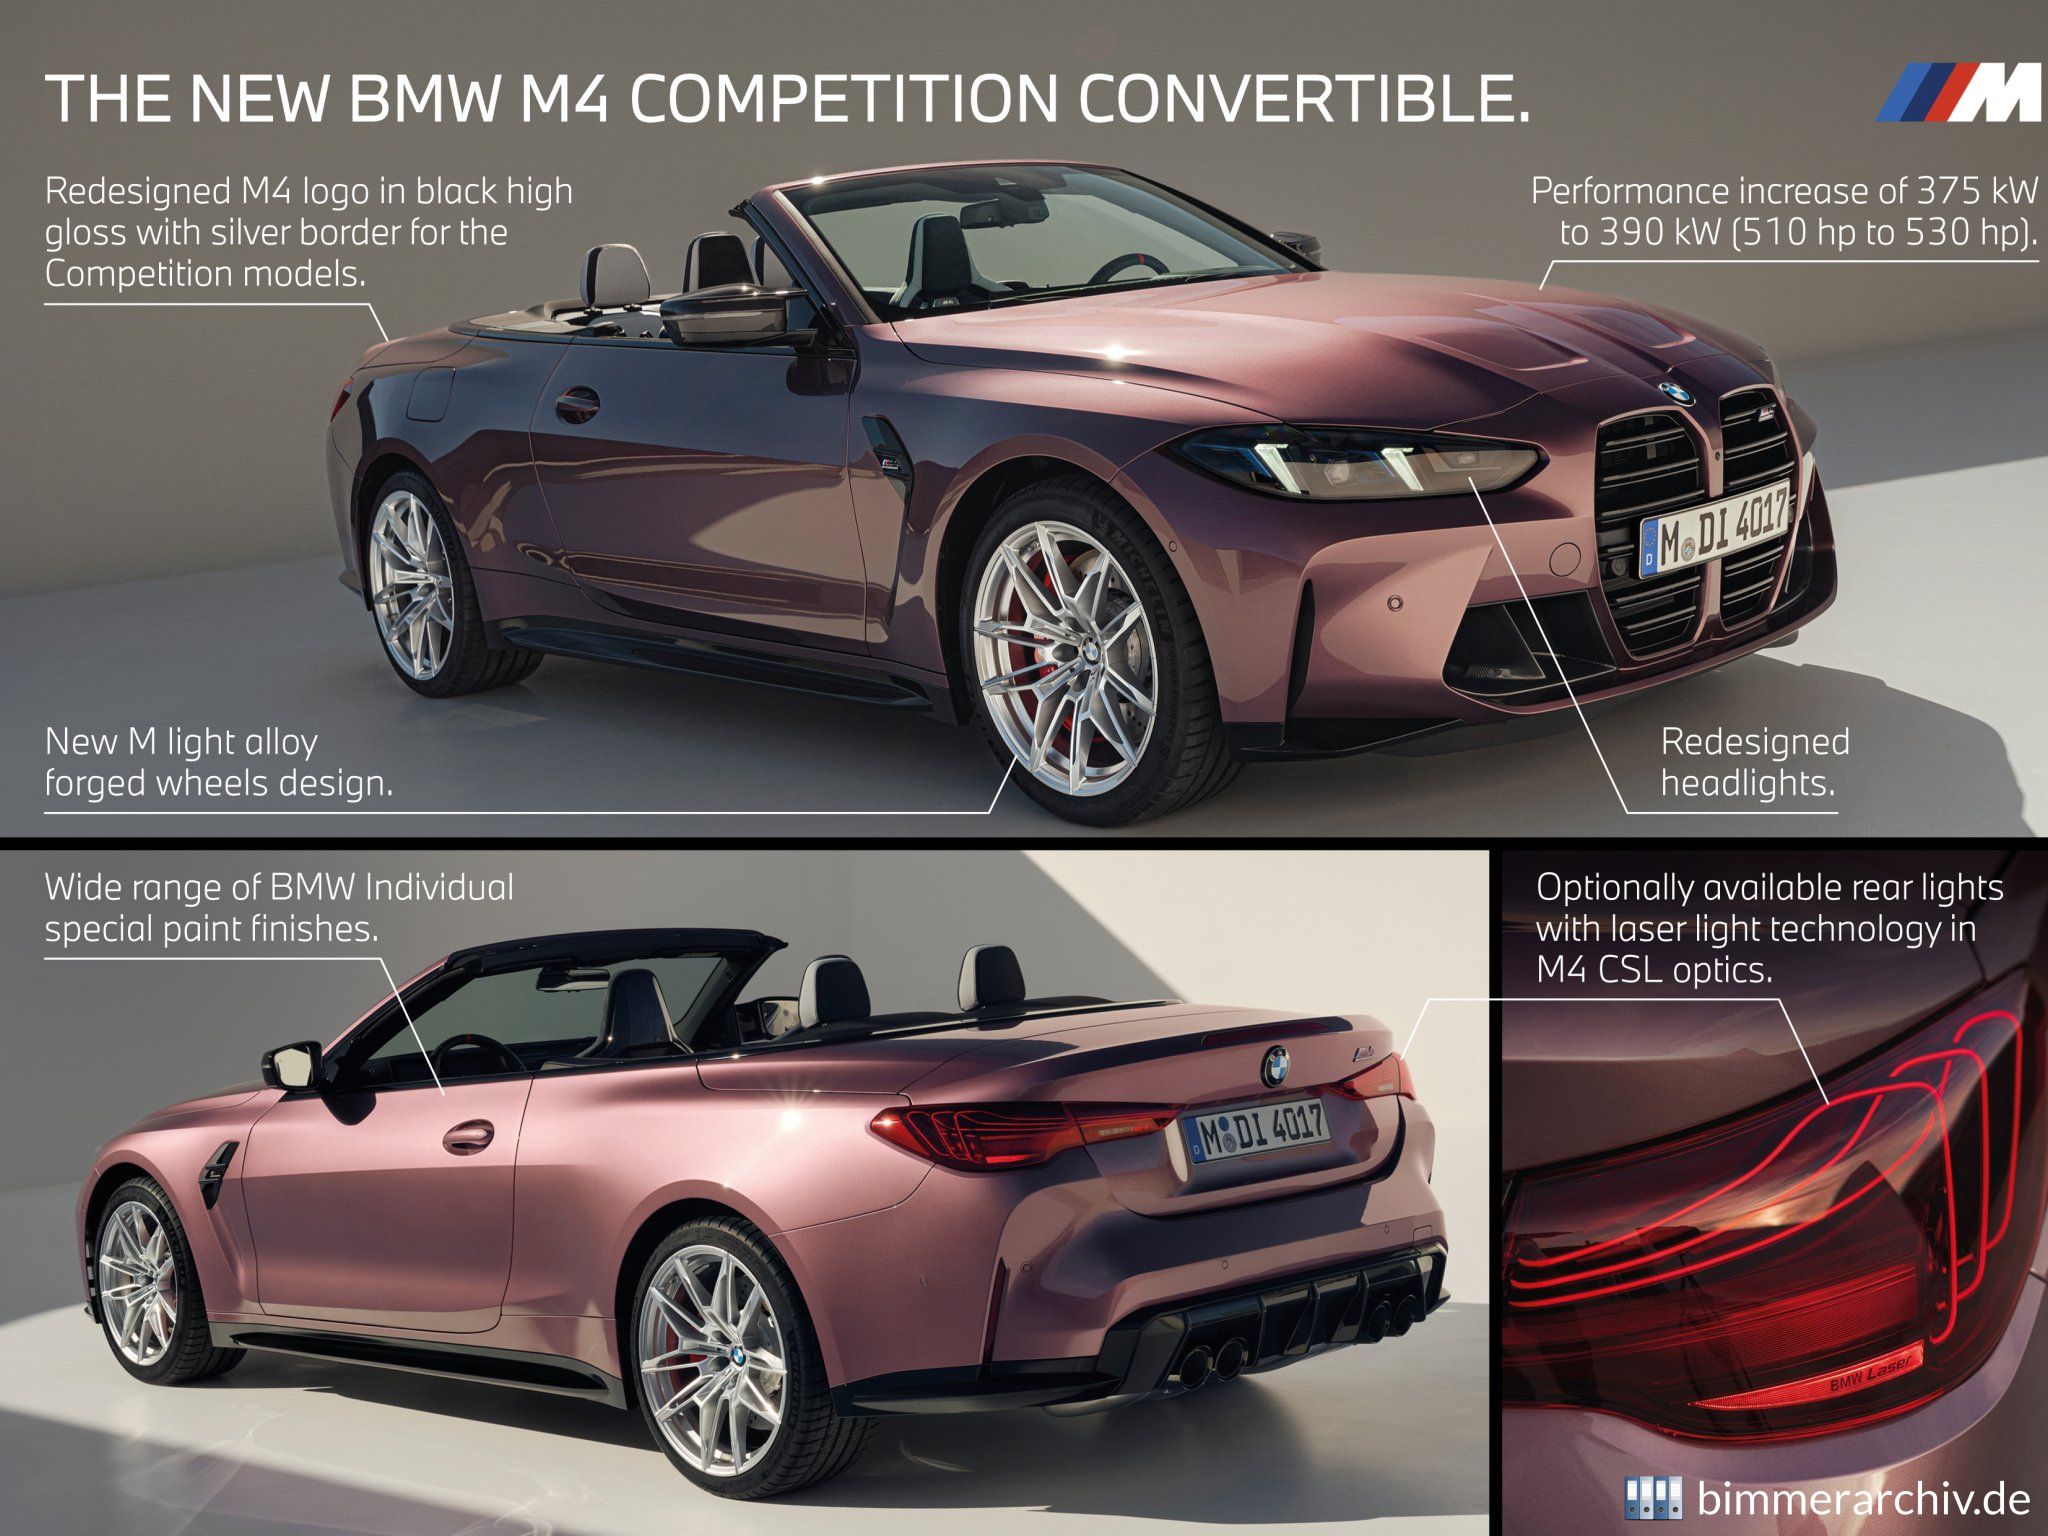 BMW M4 Convertible - Highlights